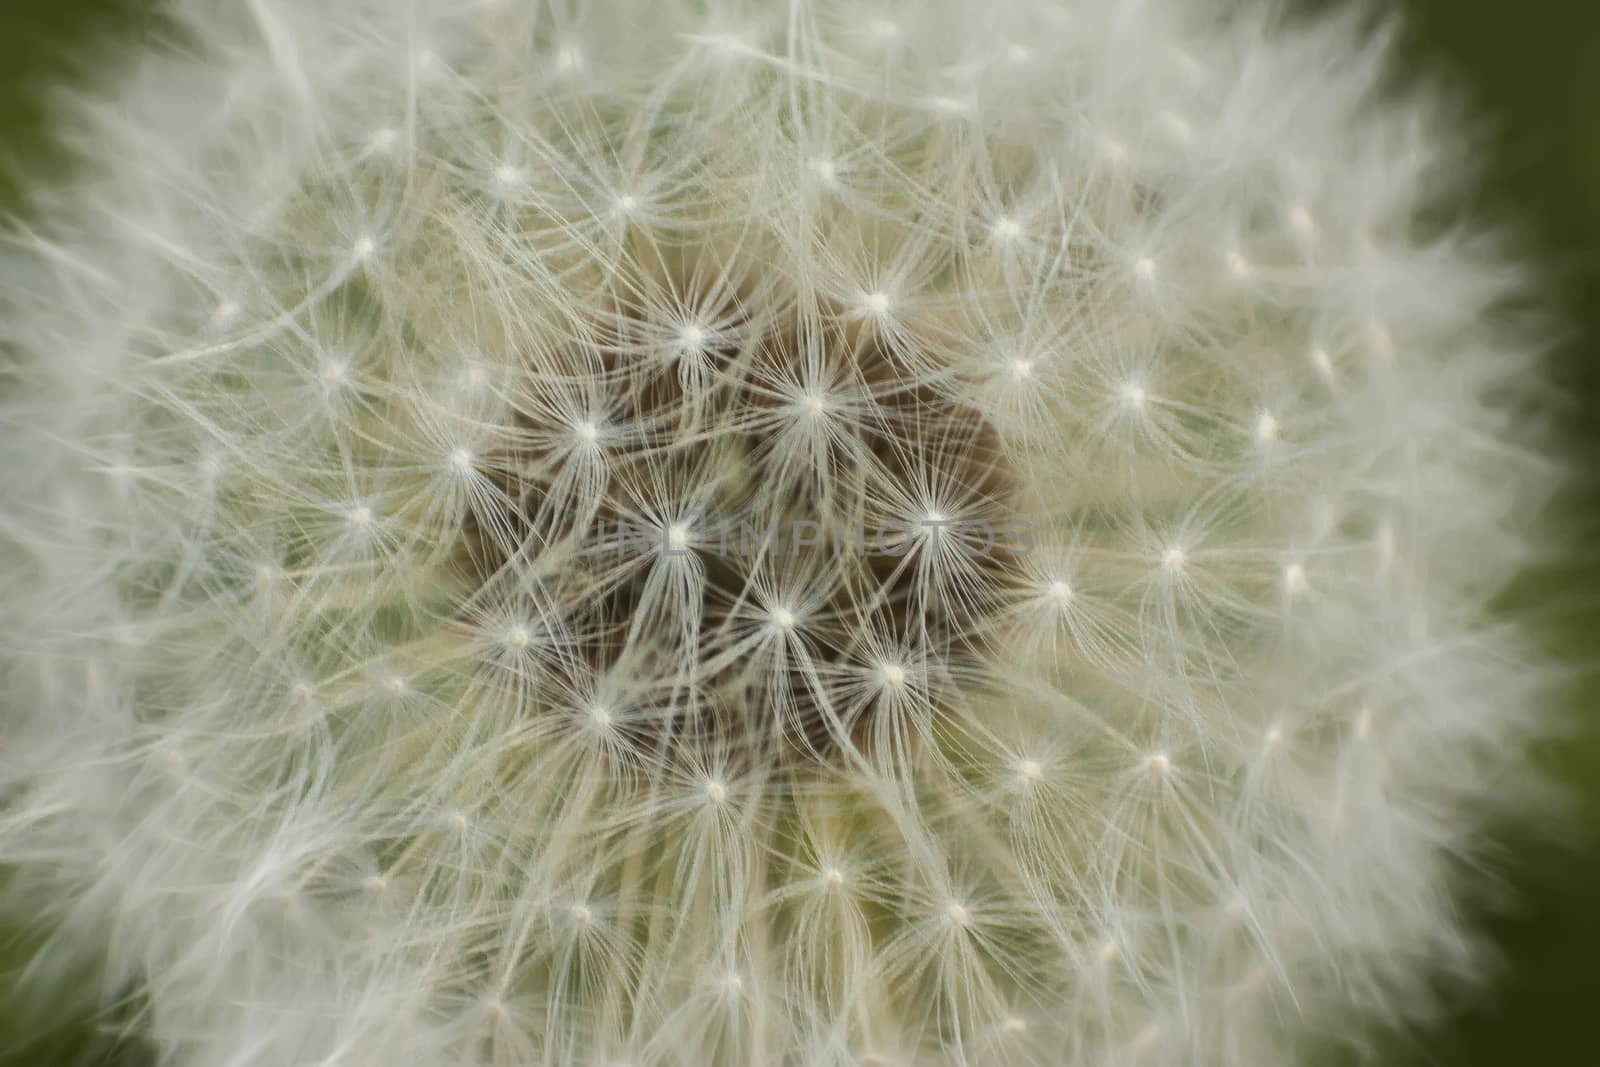 Dandelion infructescence by pippocarlot